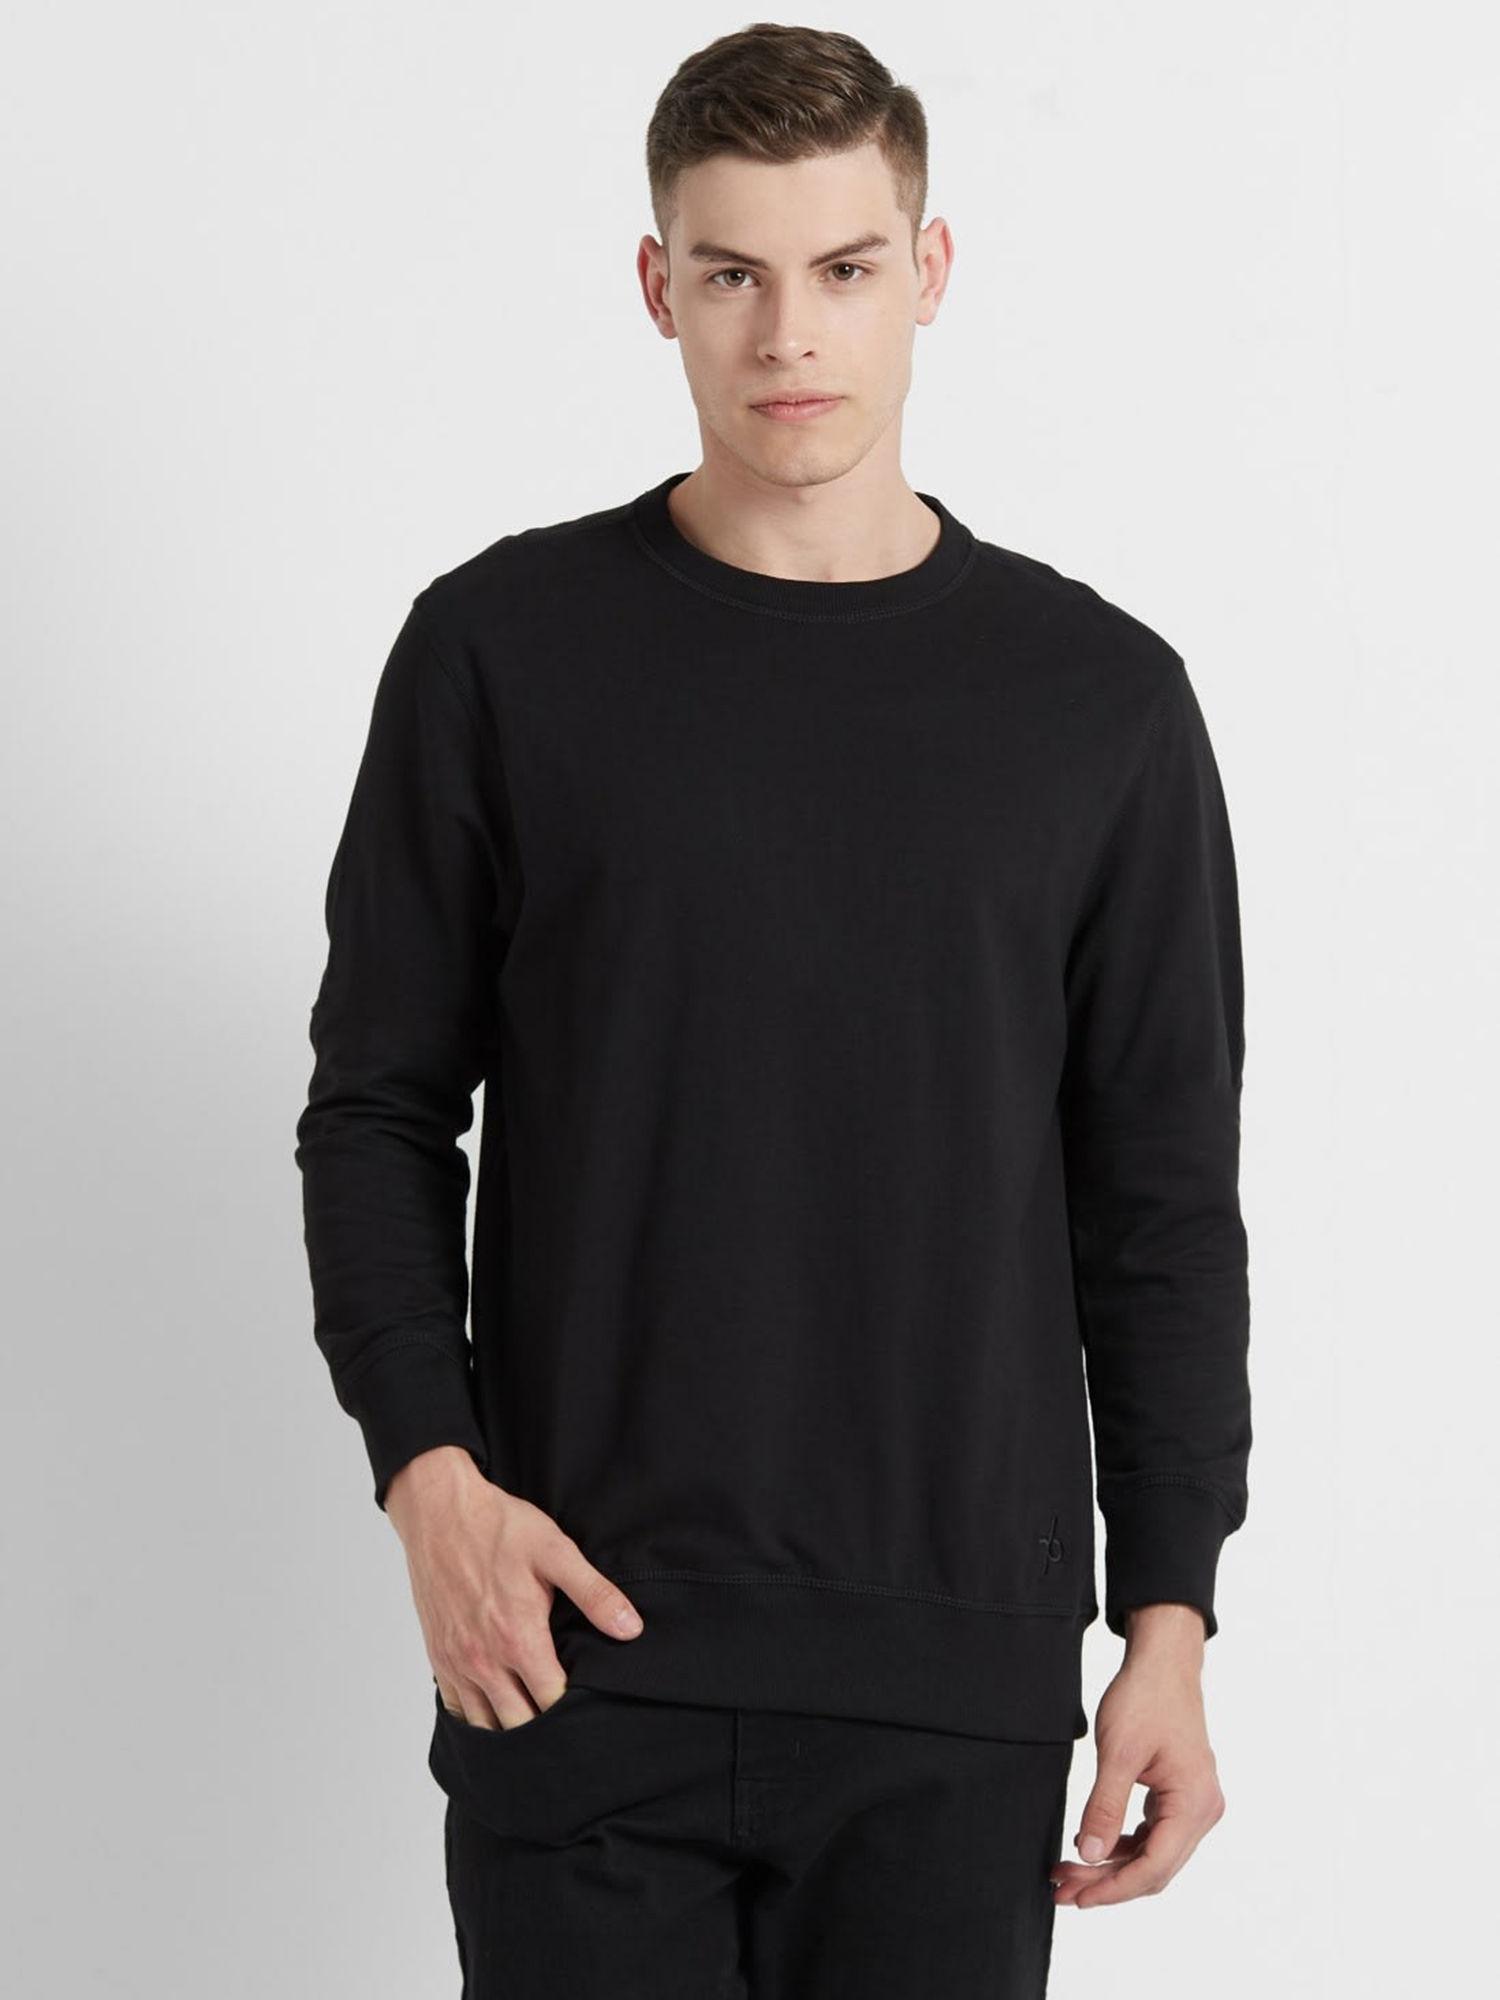 black-solid-sweatshirt